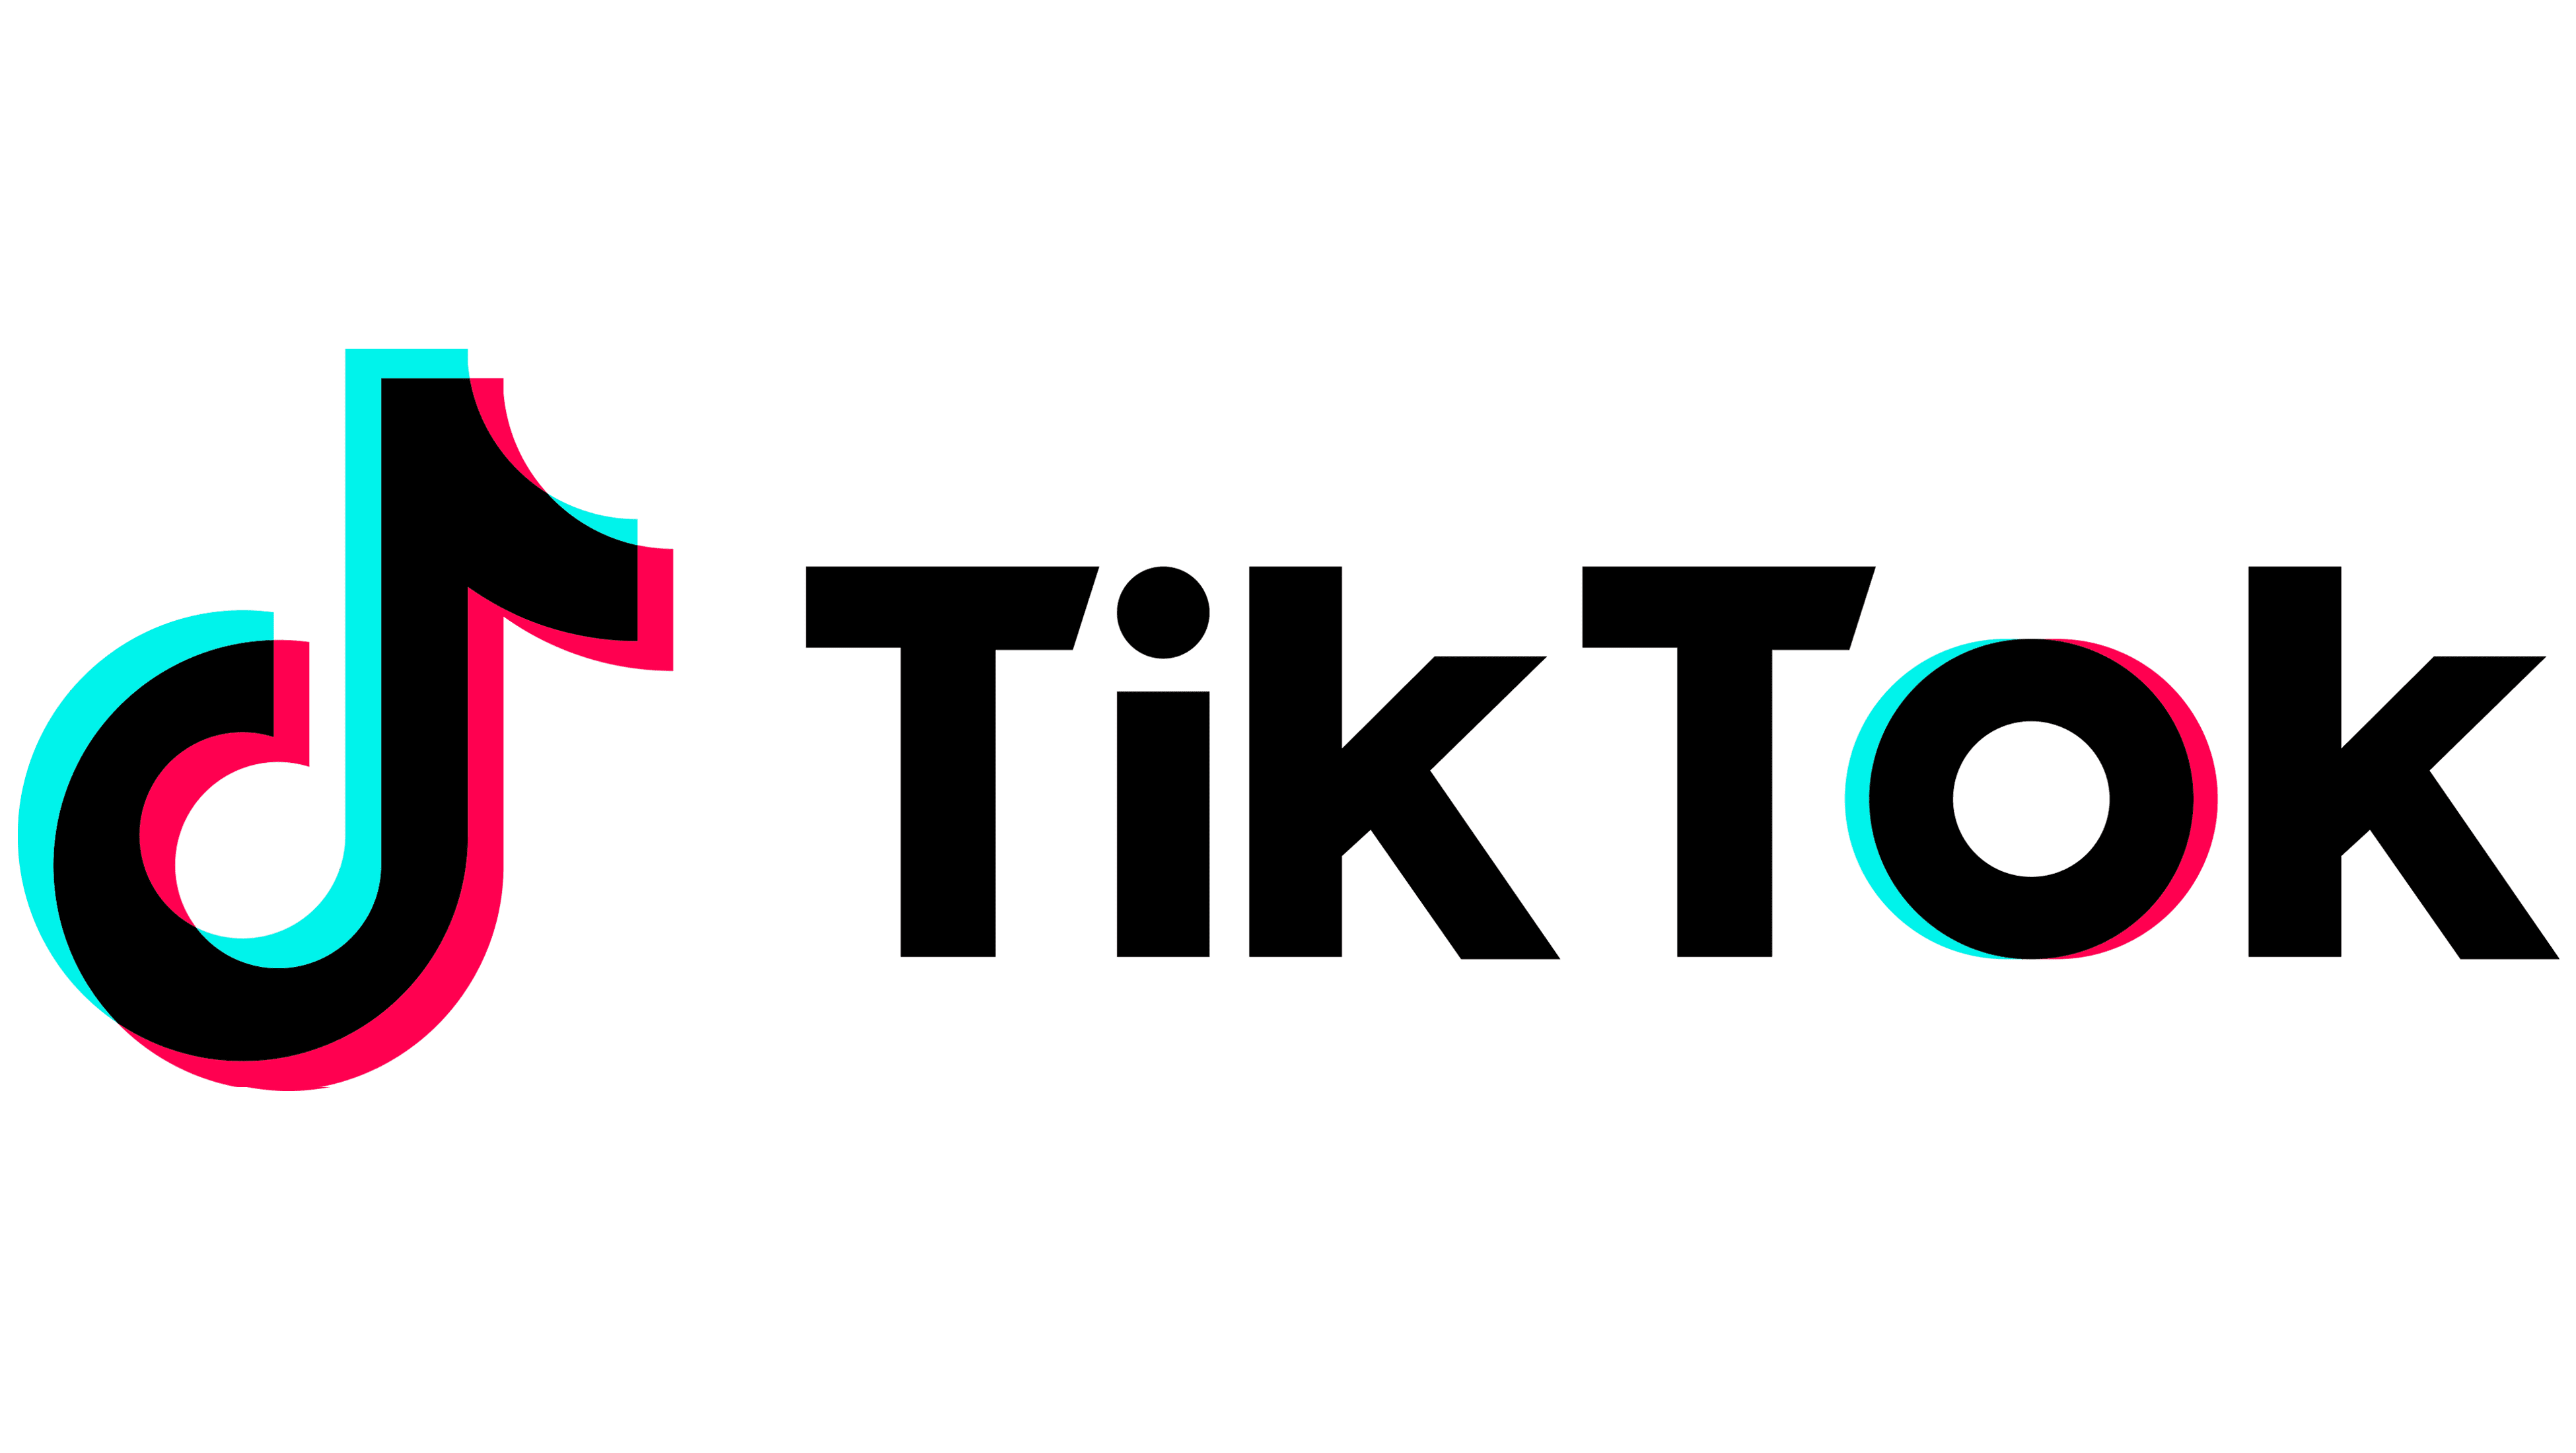 TikTok/Douyin Brand Logo